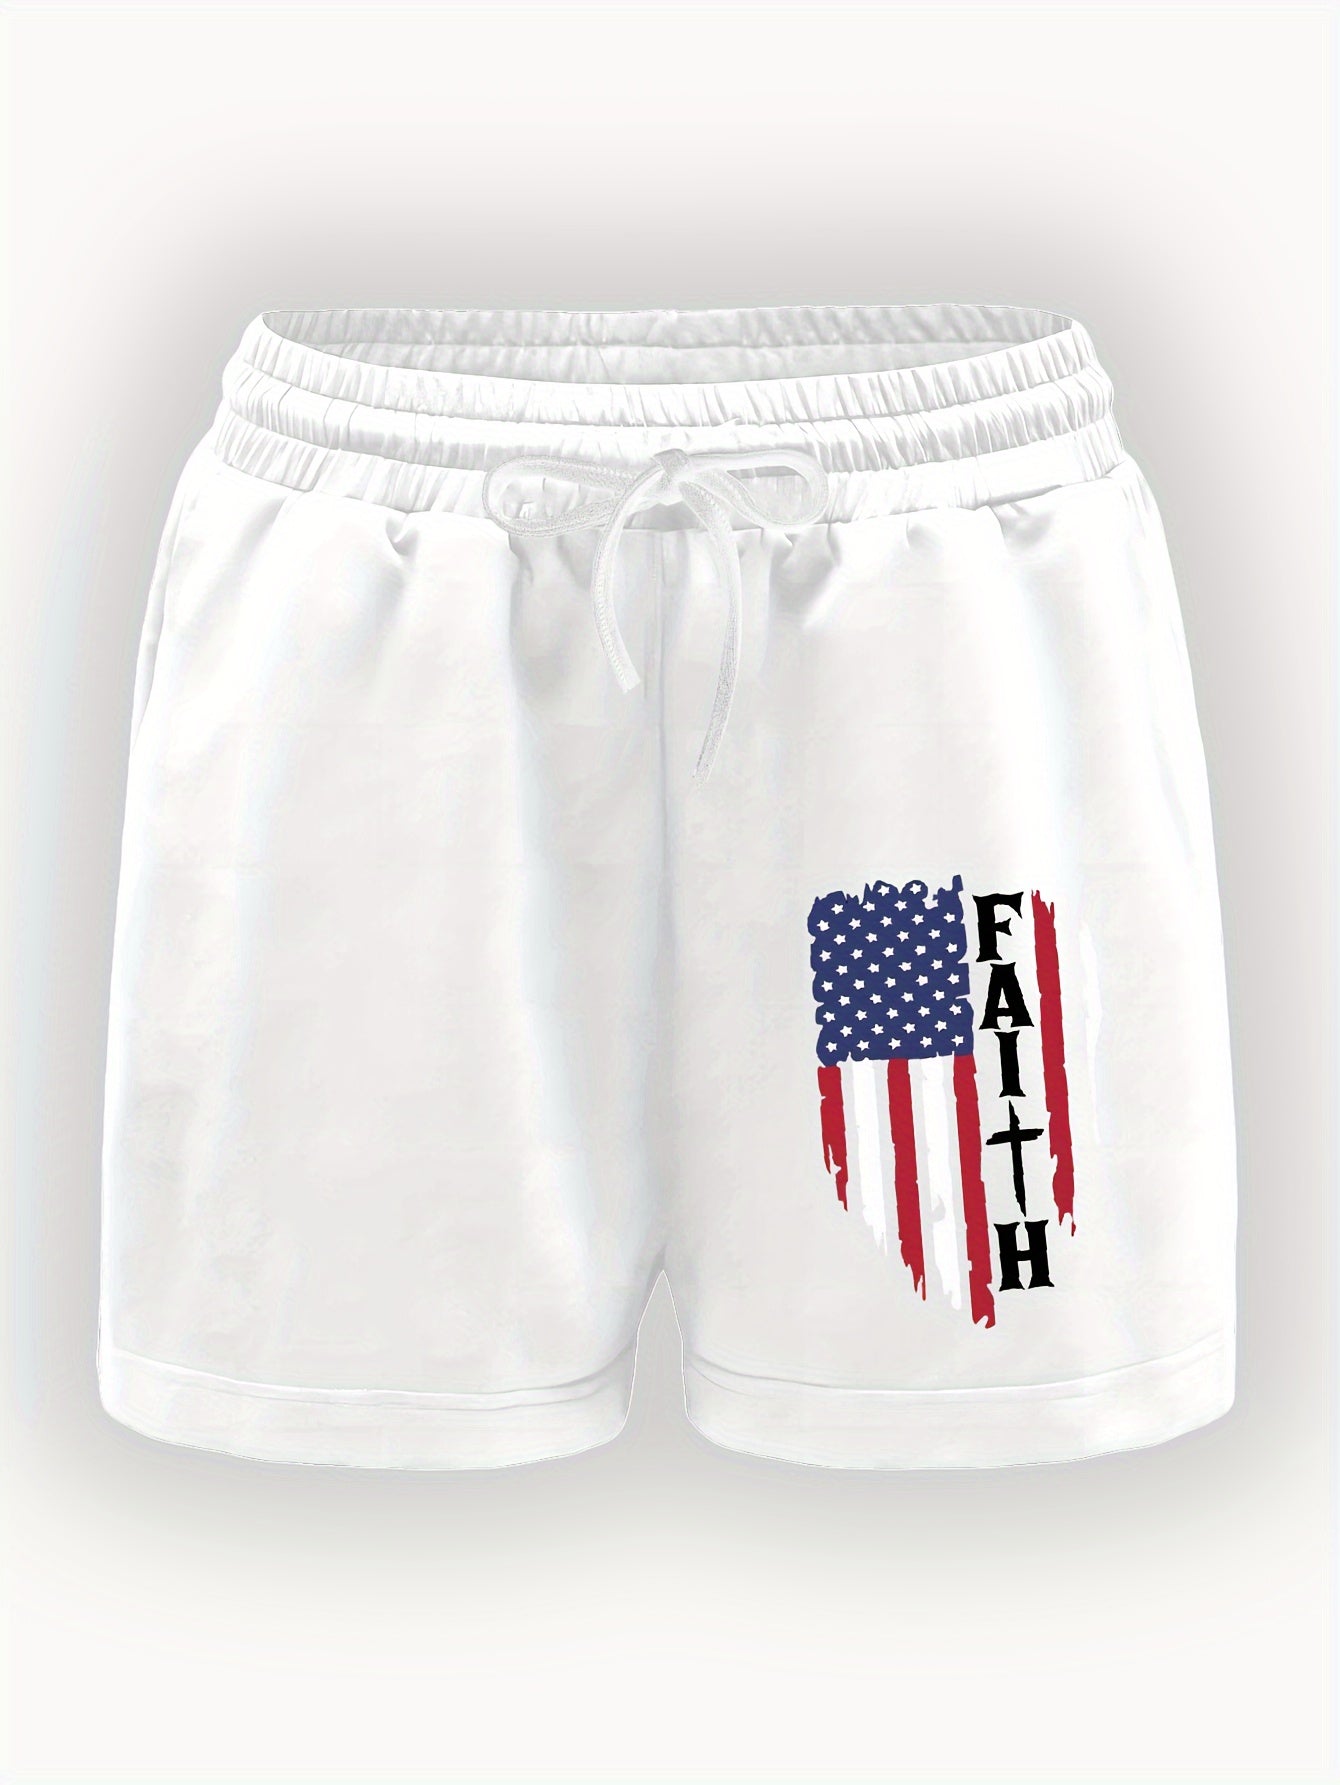 Faith (American Flag Patriotic) Women's Christian Shorts claimedbygoddesigns